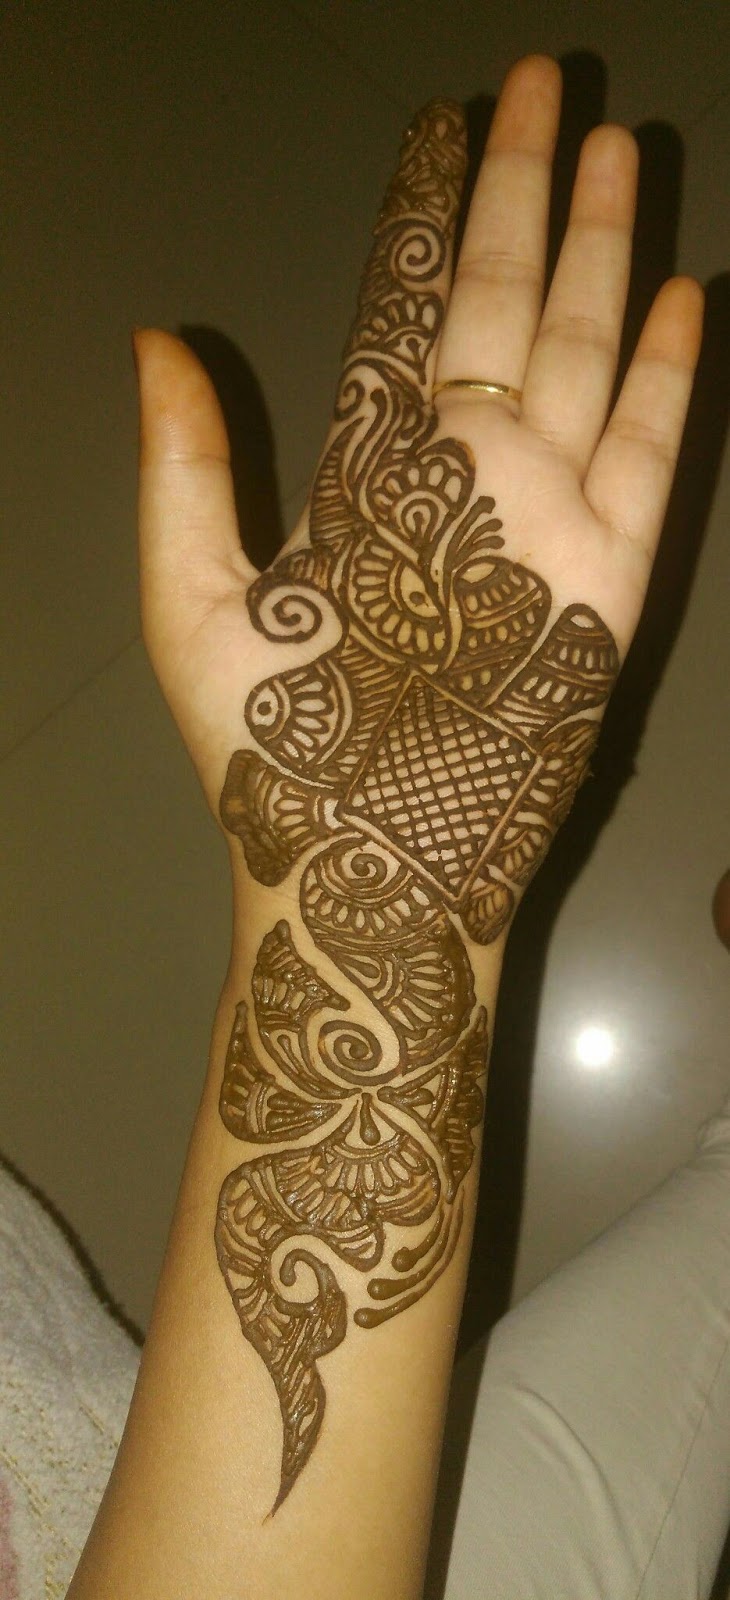 dulha dulhan mehndi設計し壁紙,一時的な刺青,パターン,手,手首,設計